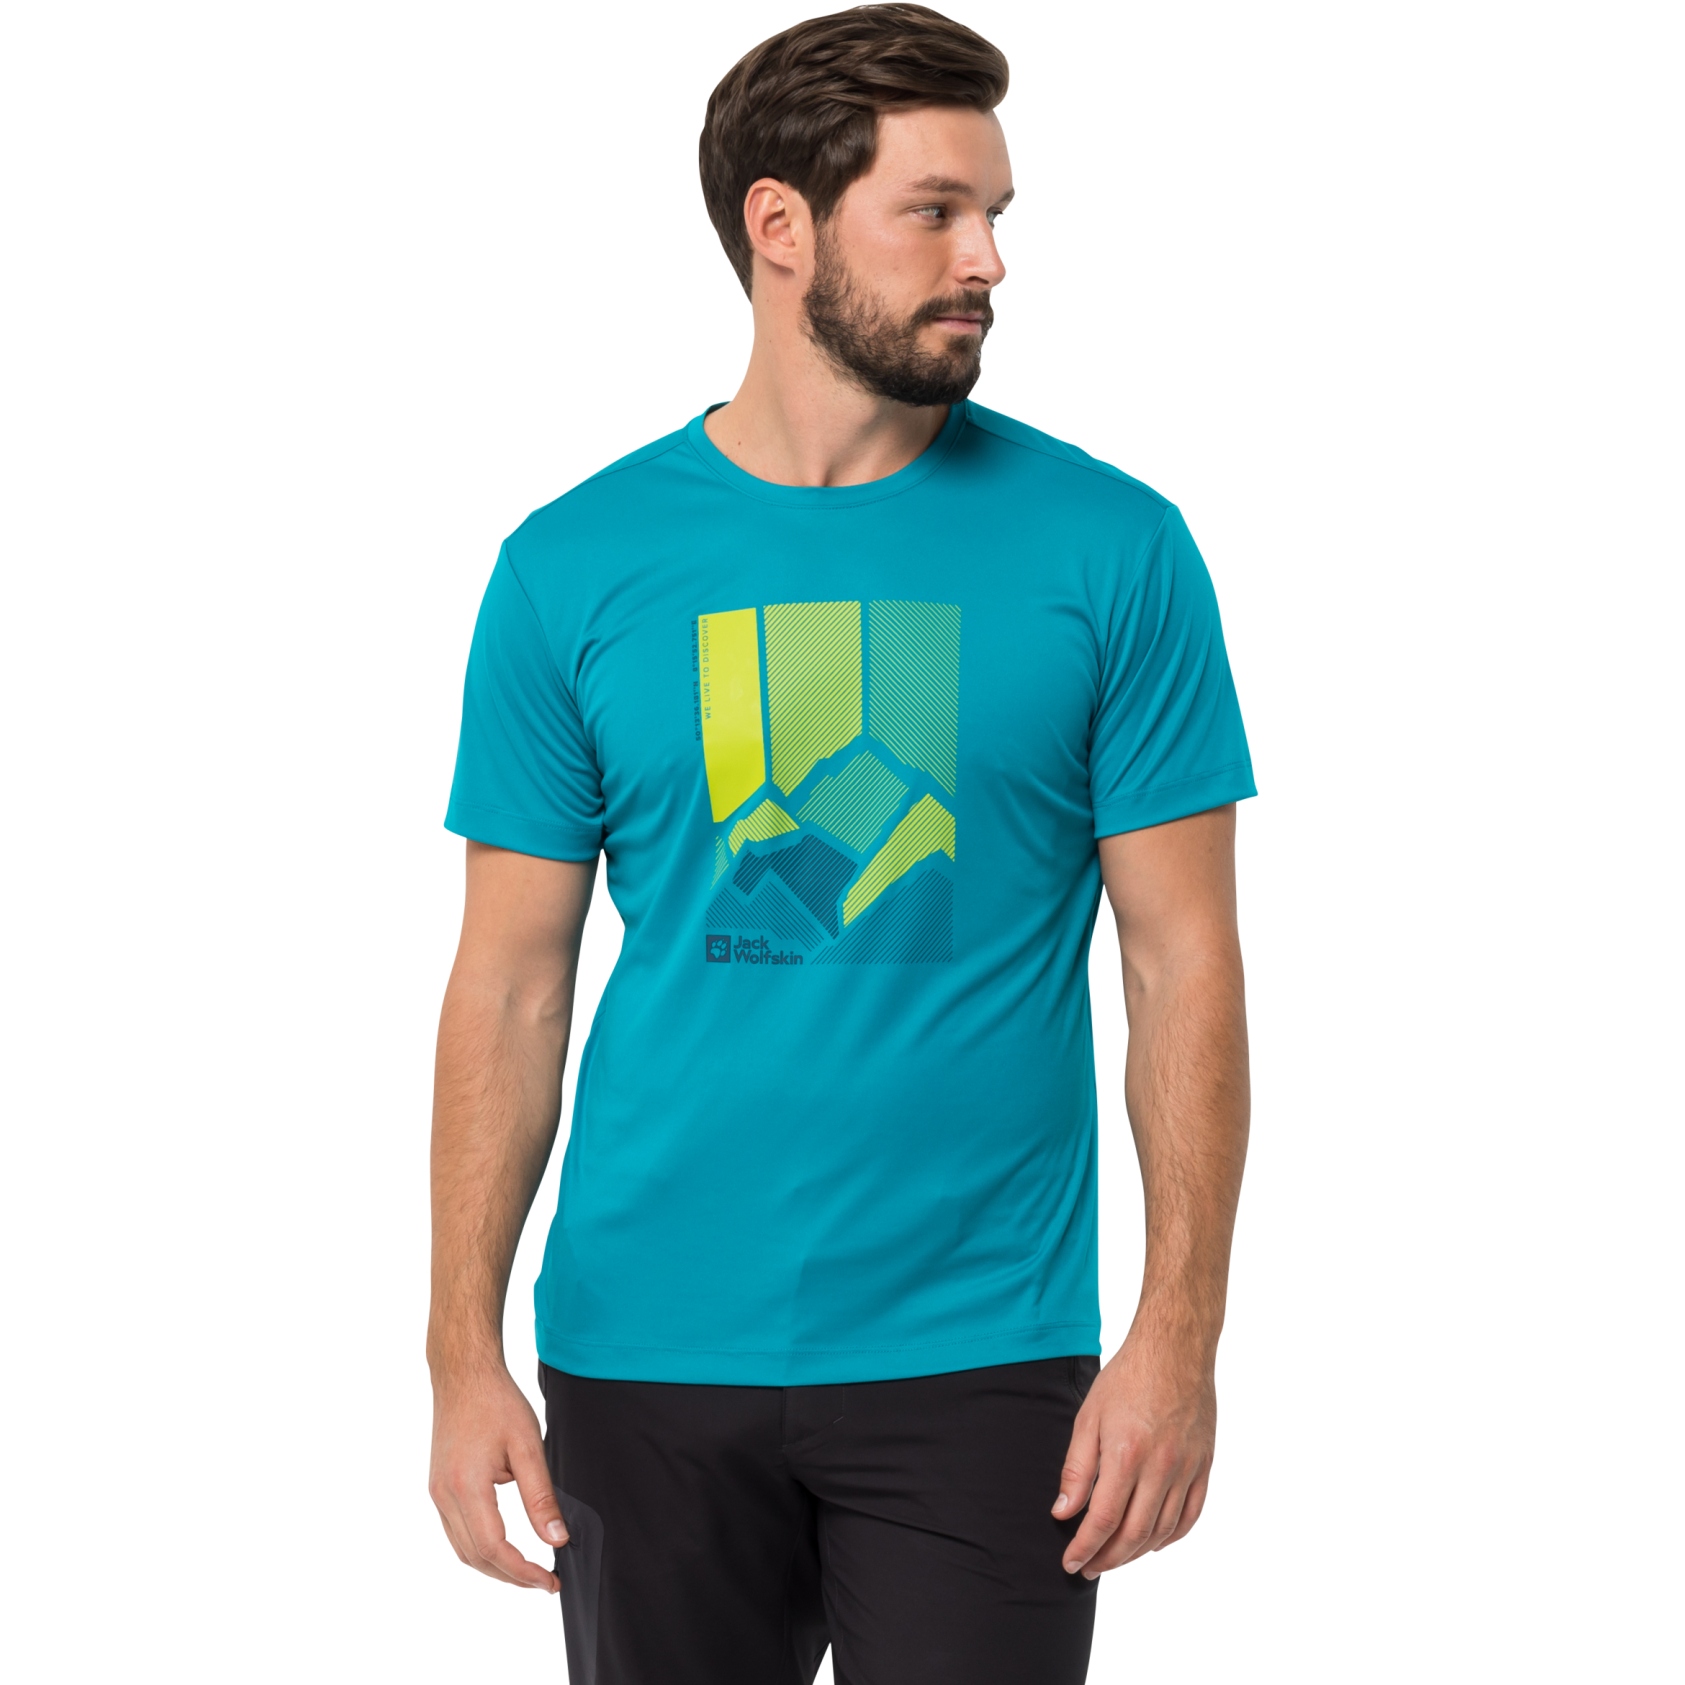 Image of Jack Wolfskin Peak Graphic T-Shirt Men - everest blue